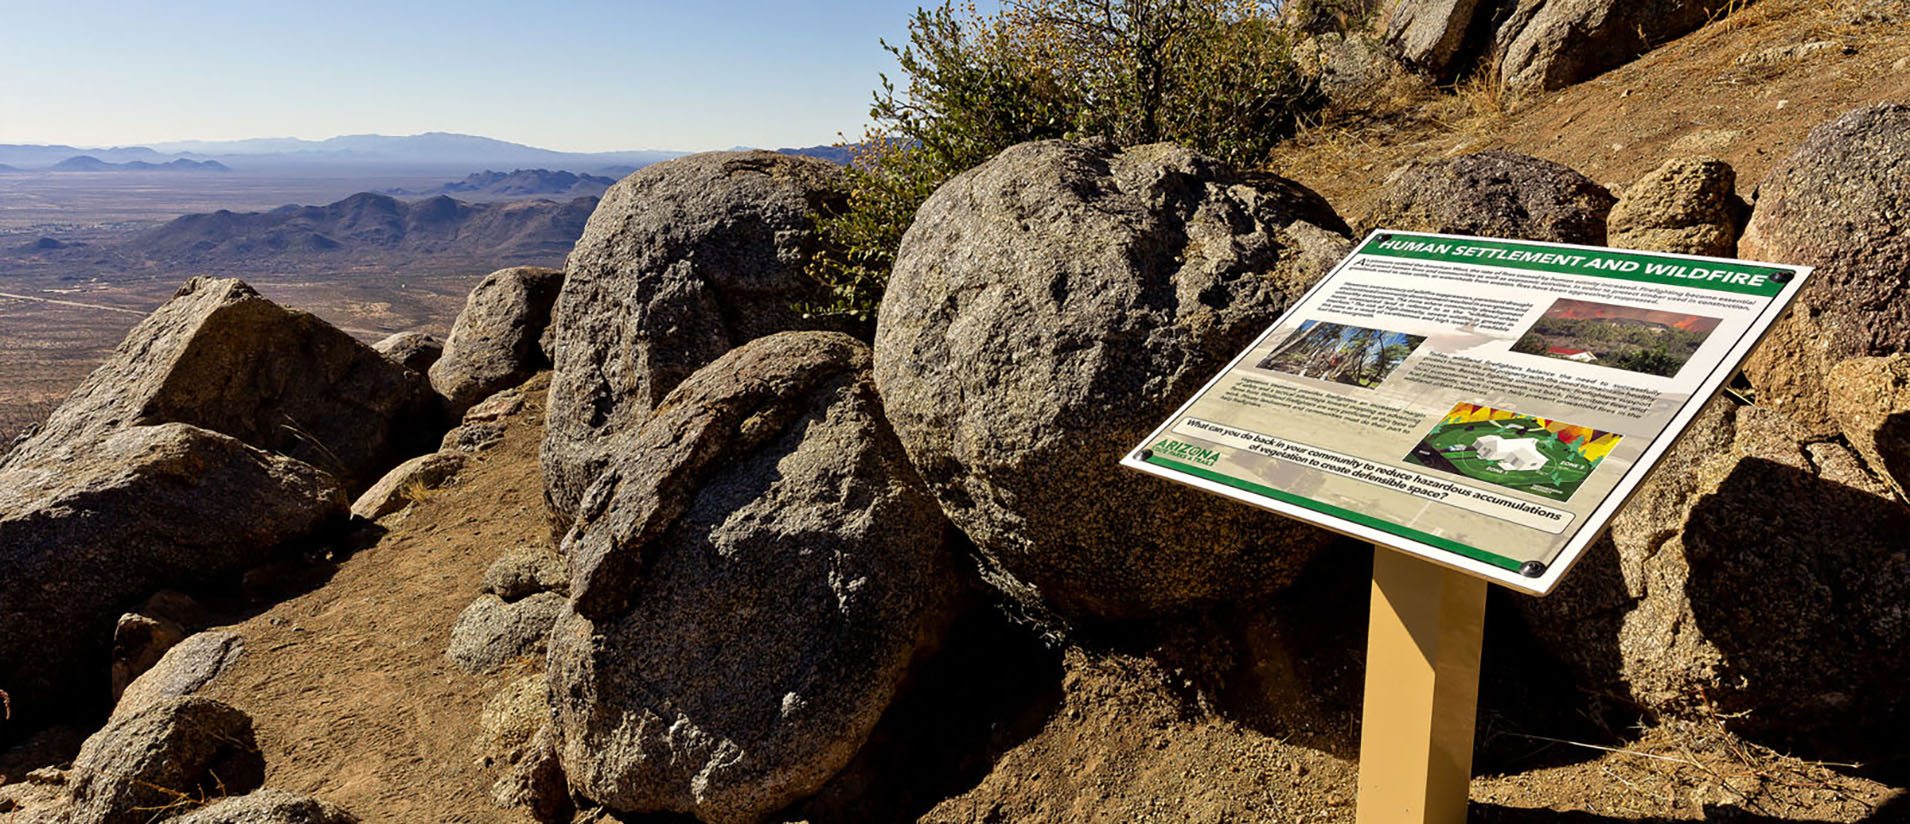 Interpretive signage along the trail at Granite Mountain Hotshots Memorial State Park